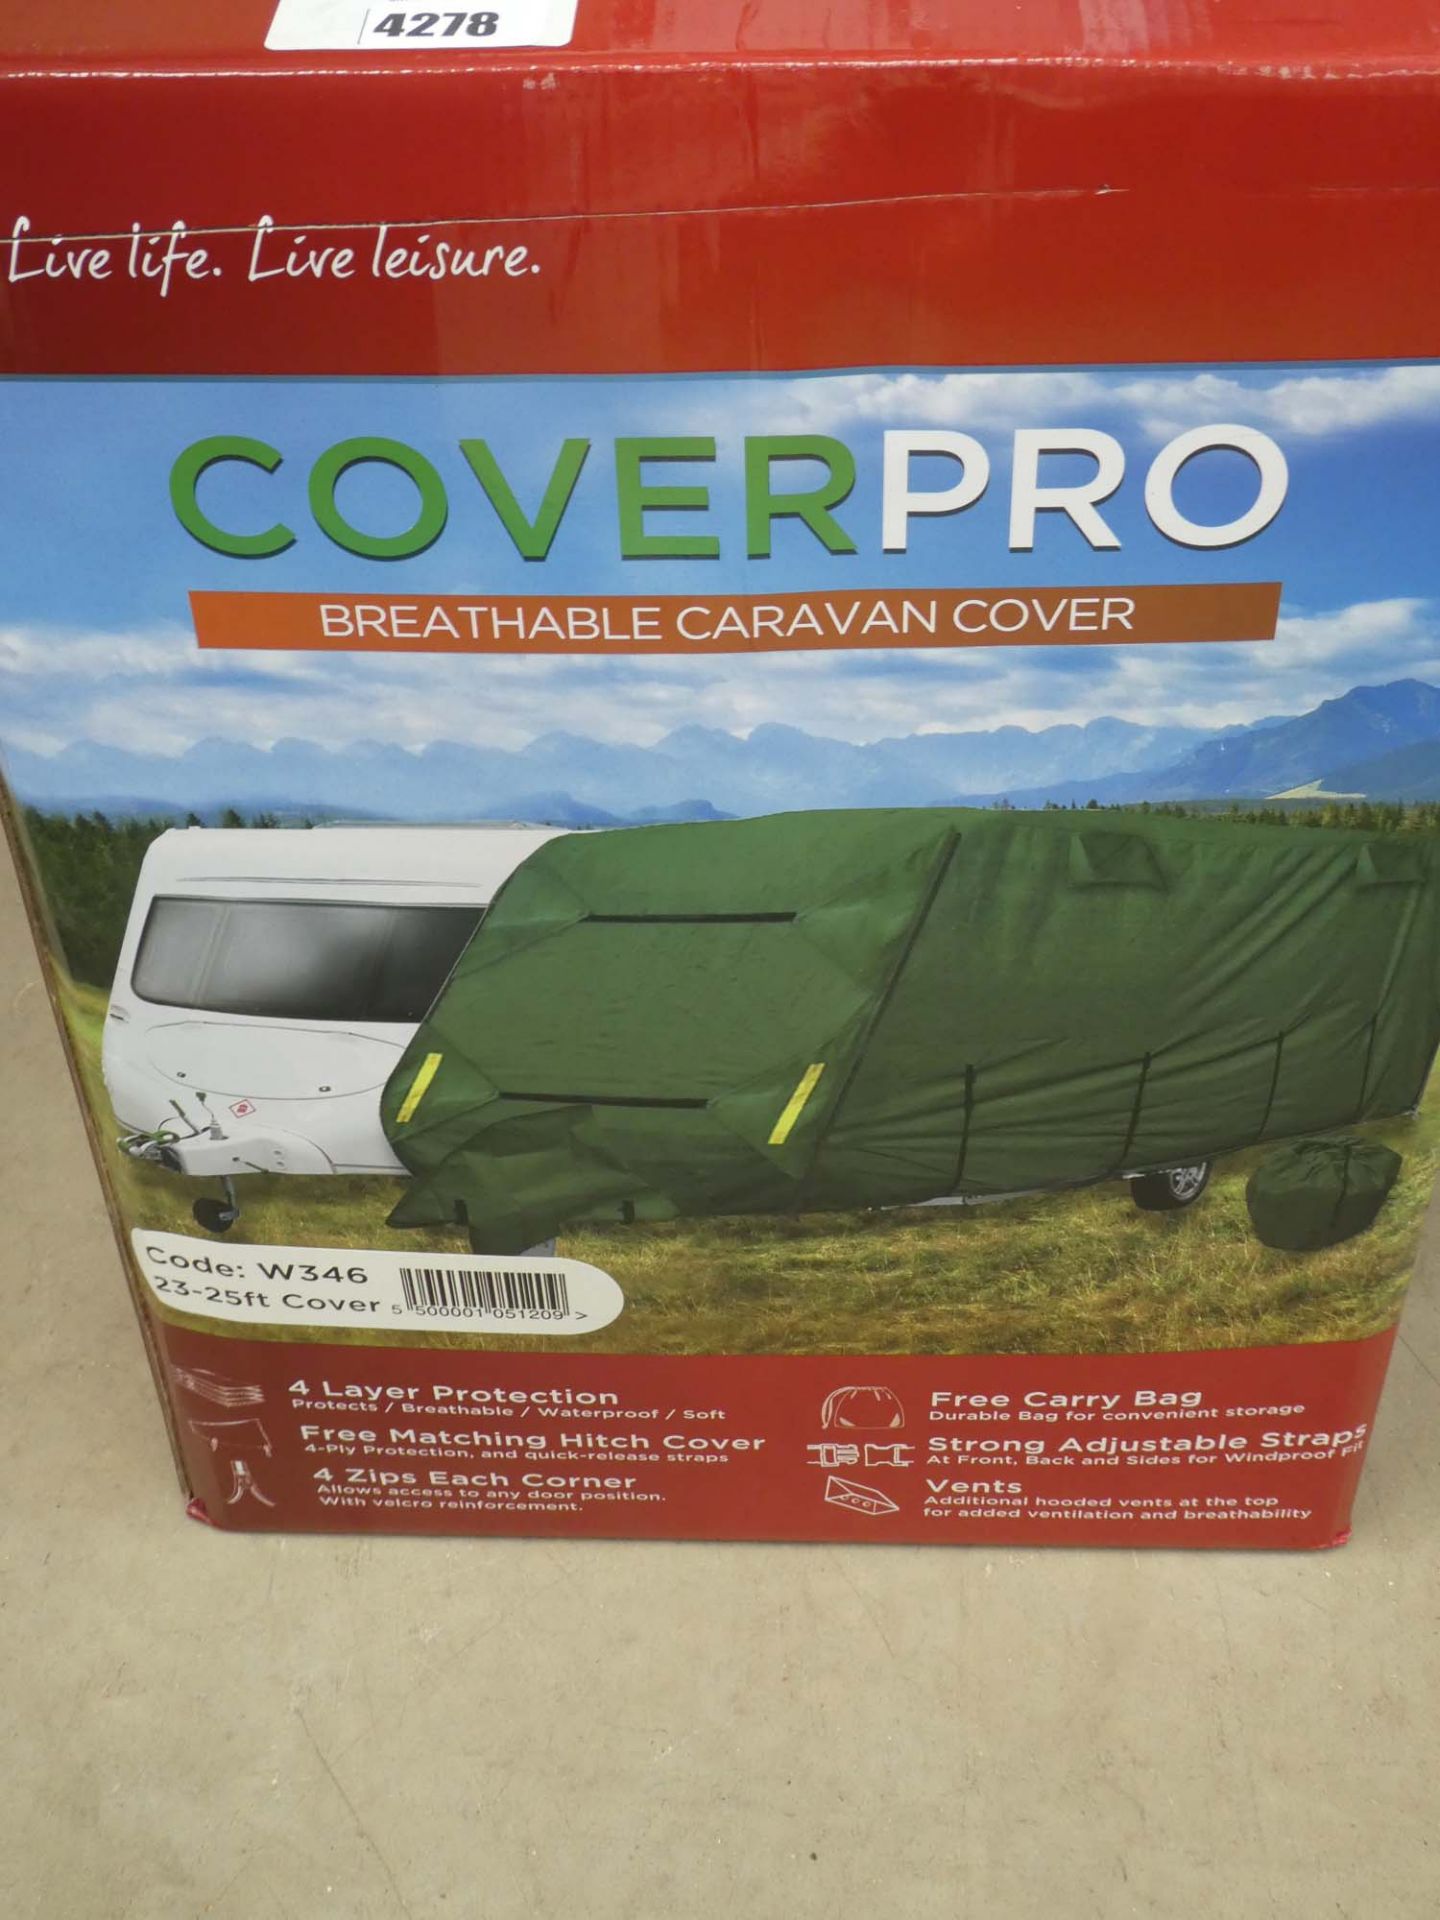 Cover Pro breathable caravan cover